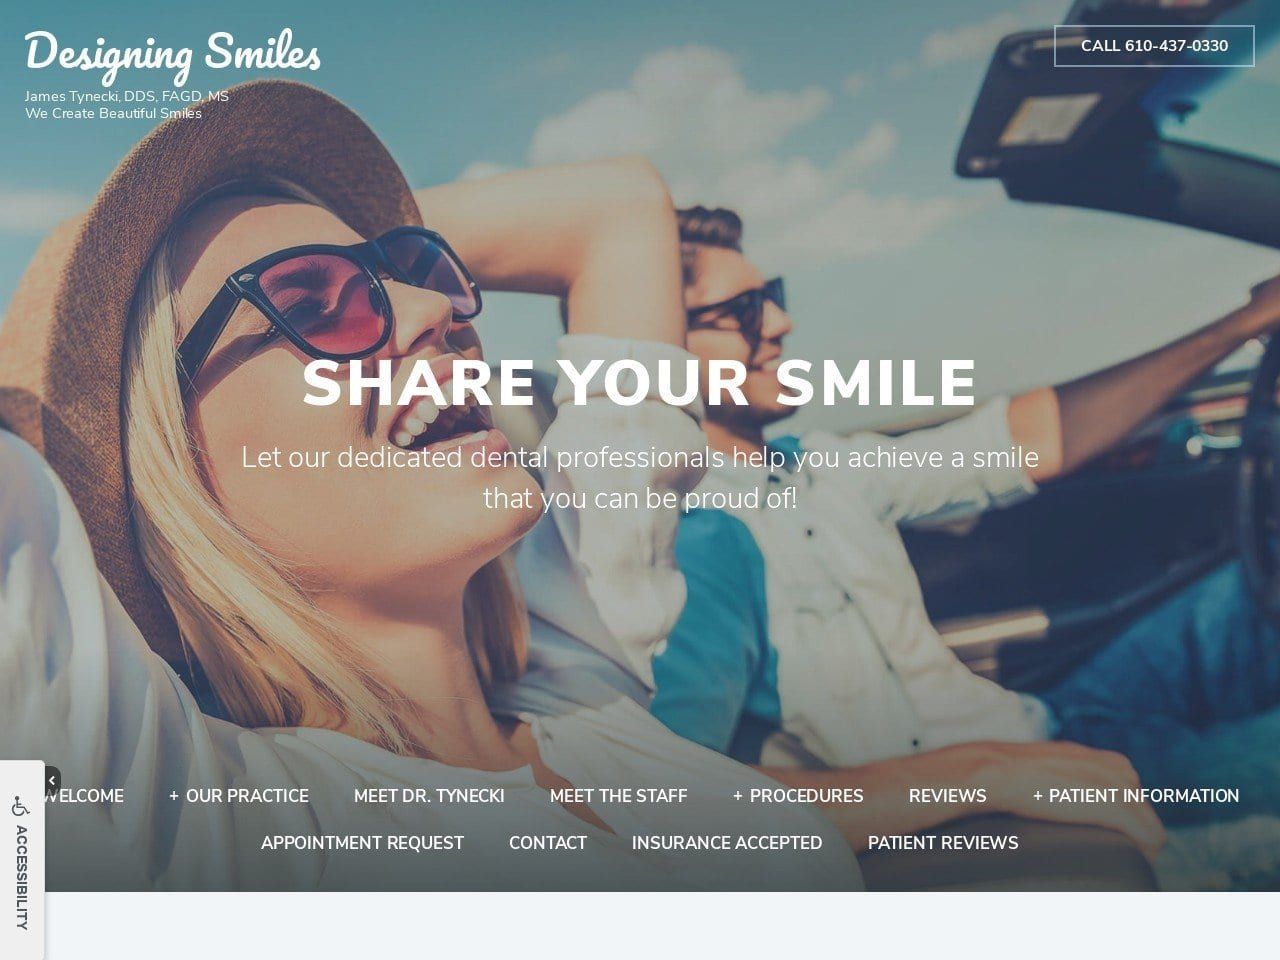 Designing Smiles Website Screenshot from theallentowndentist.com